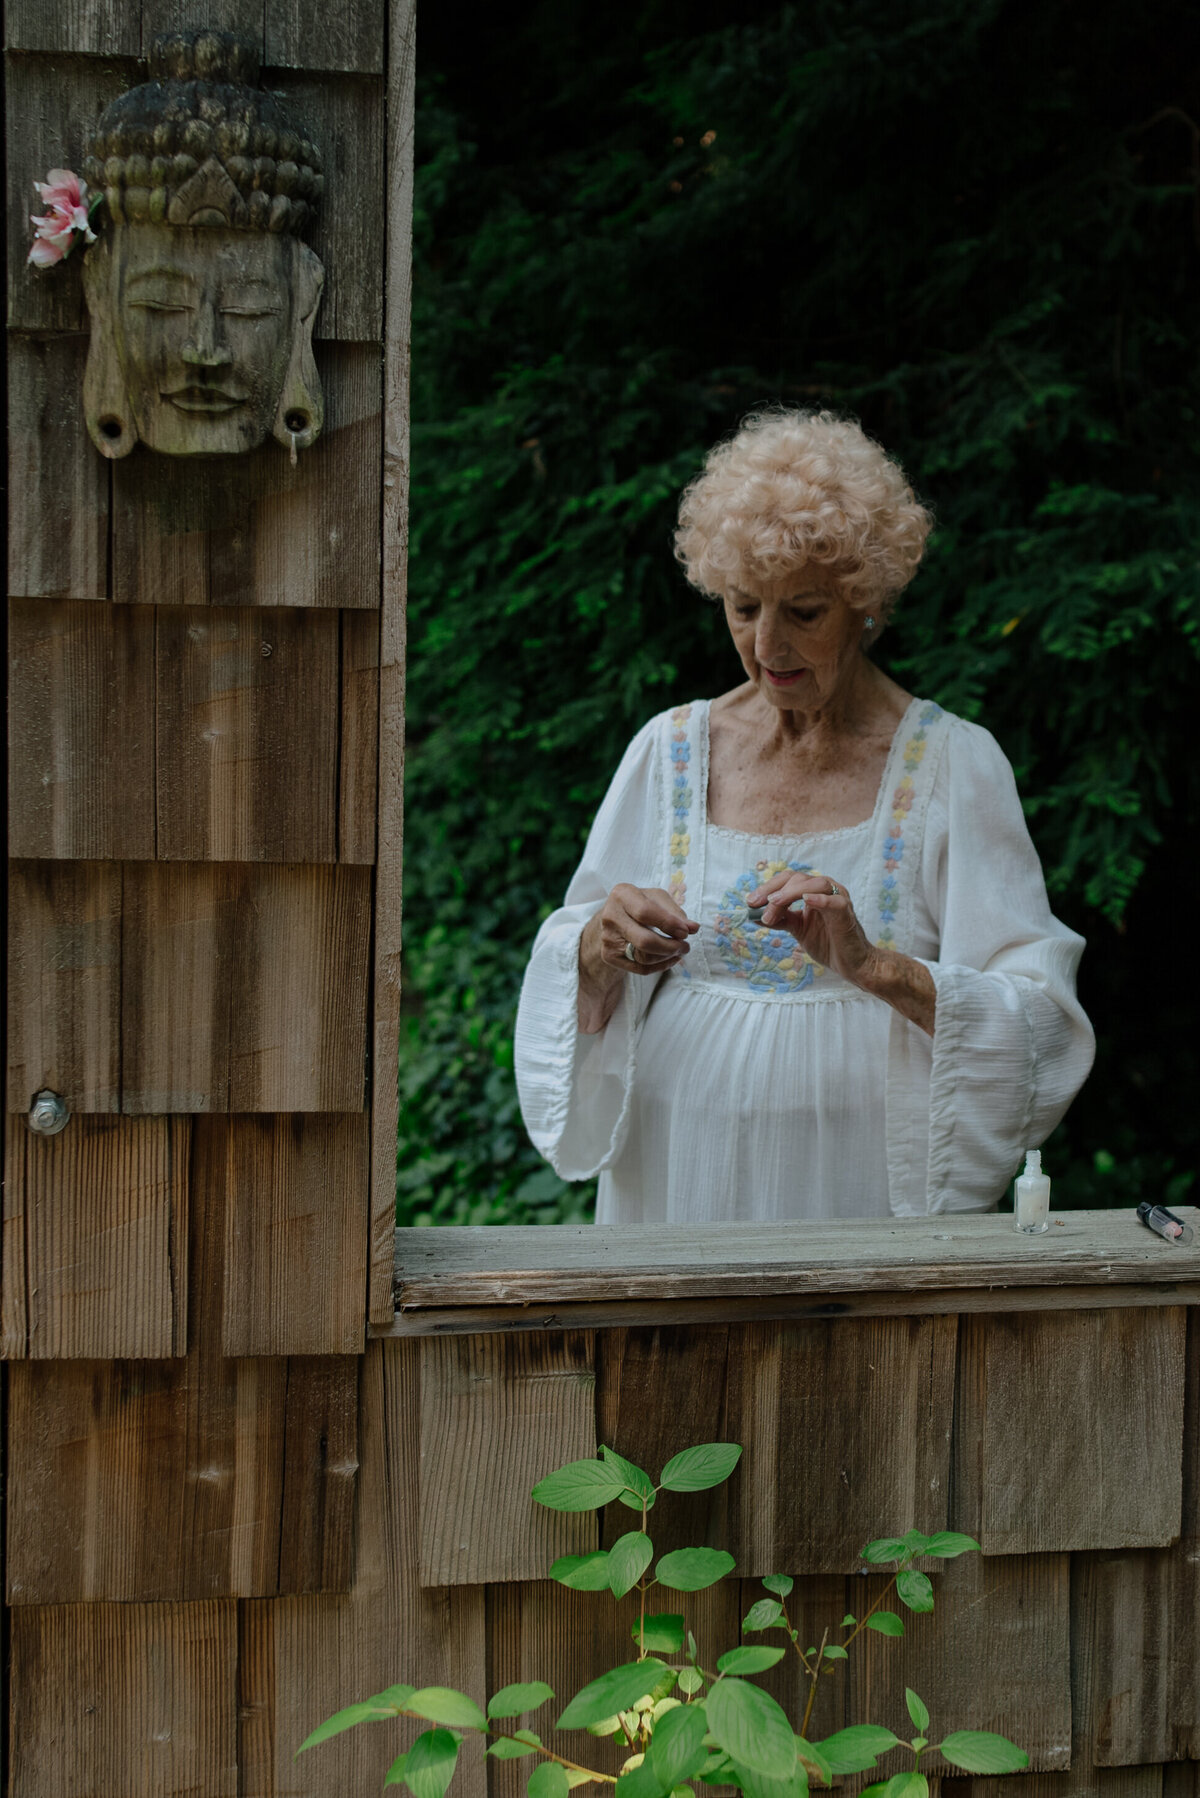 Grandma does her nails before Pamplin Grove redwood wedding